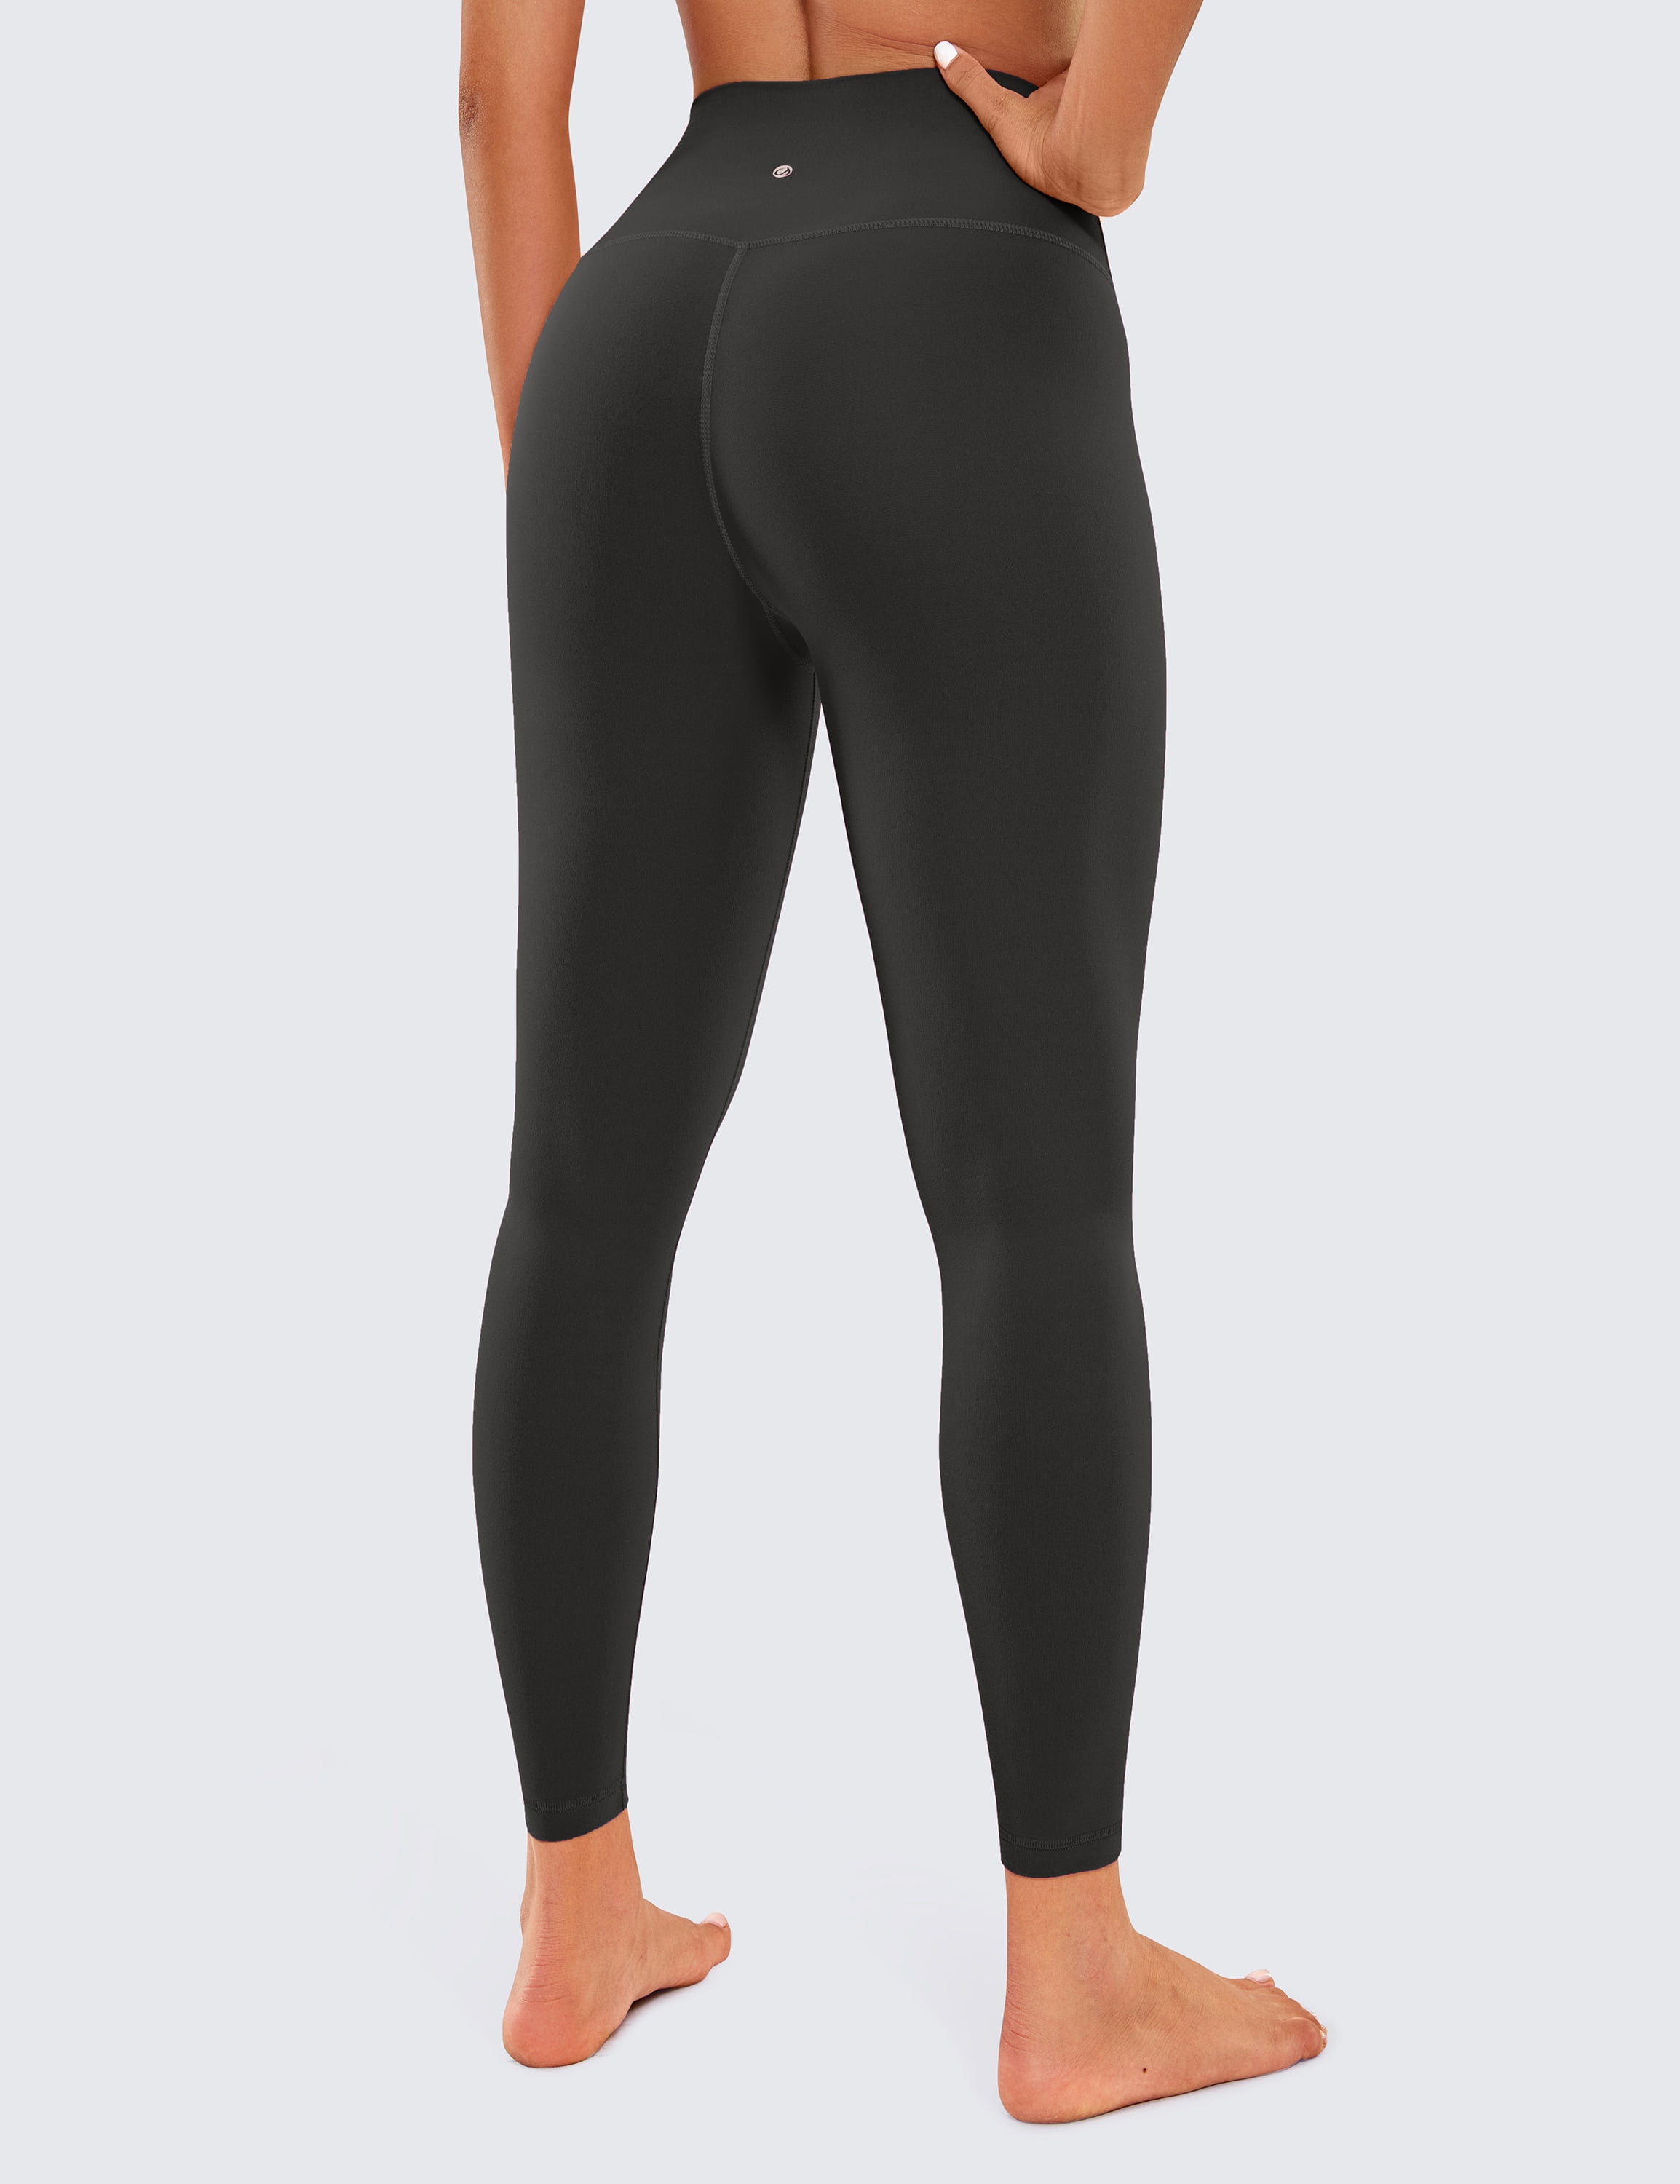 HHF Yoga Pants & Mats Women Yoga Pants, Buttery Soft 4 Way Stretch Workout  Leggings (Color : Black Grey, Size : M)